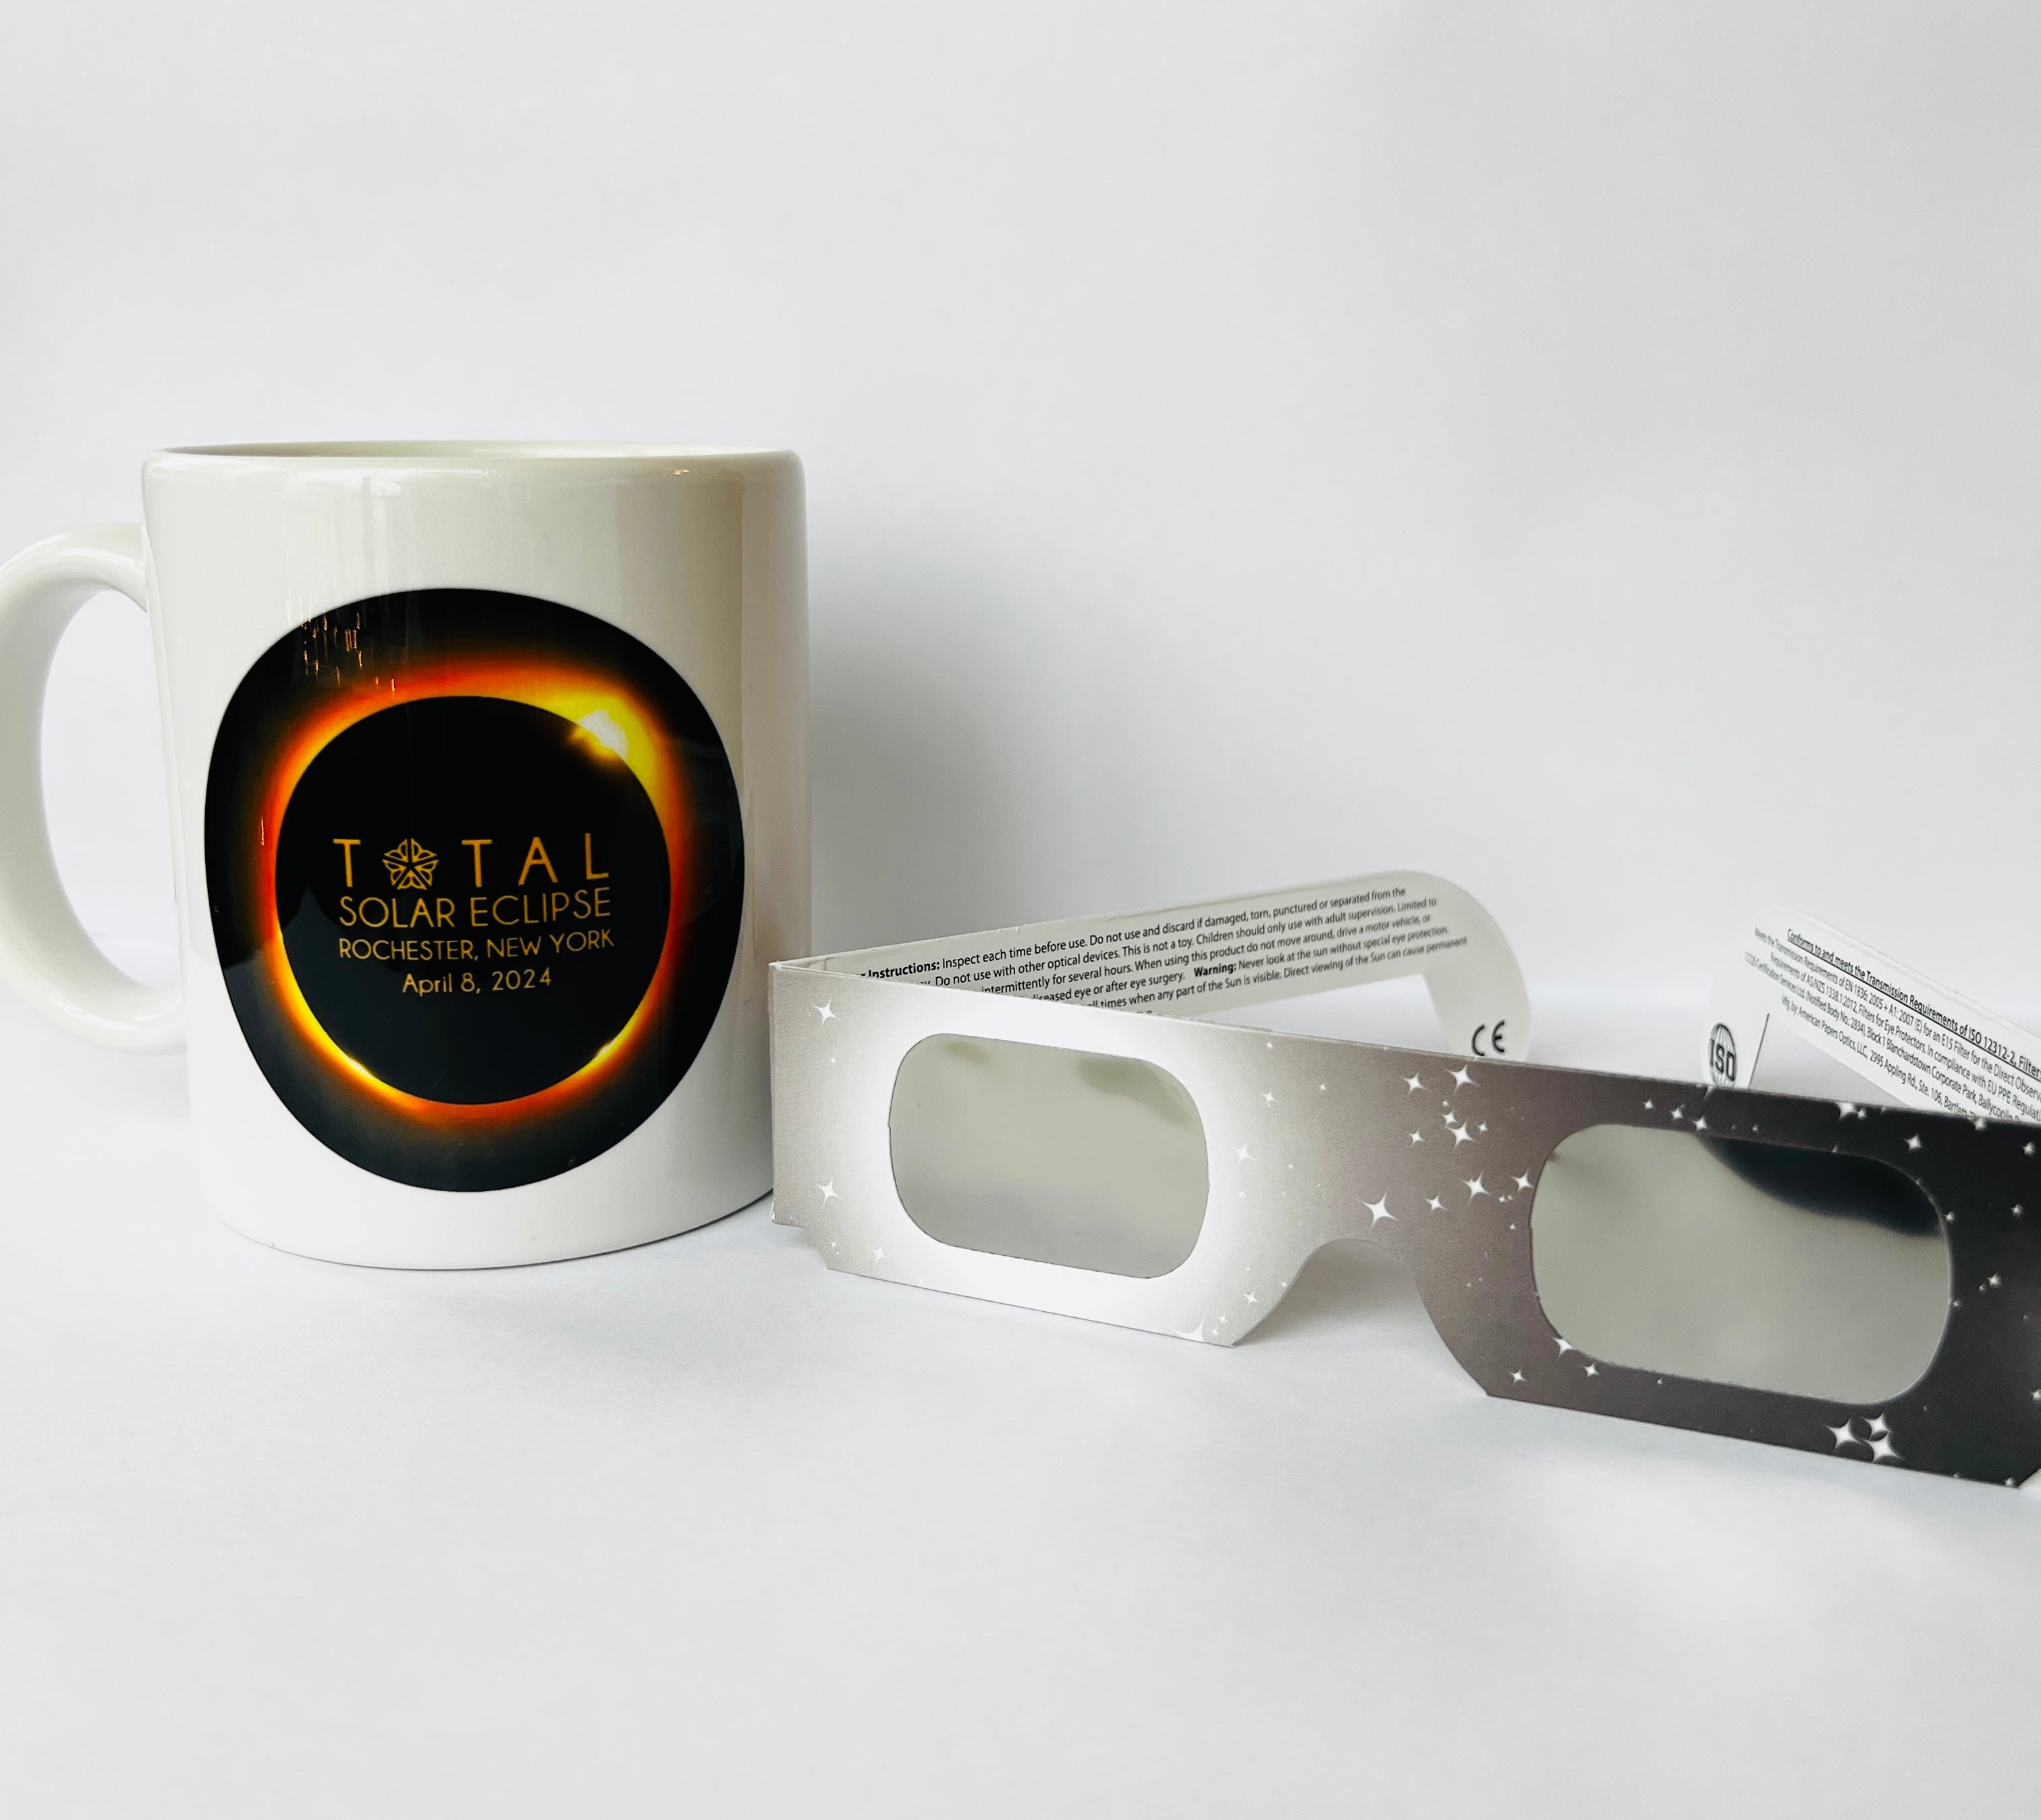 Total Solar Eclipse Rochester, NY Logo Mug